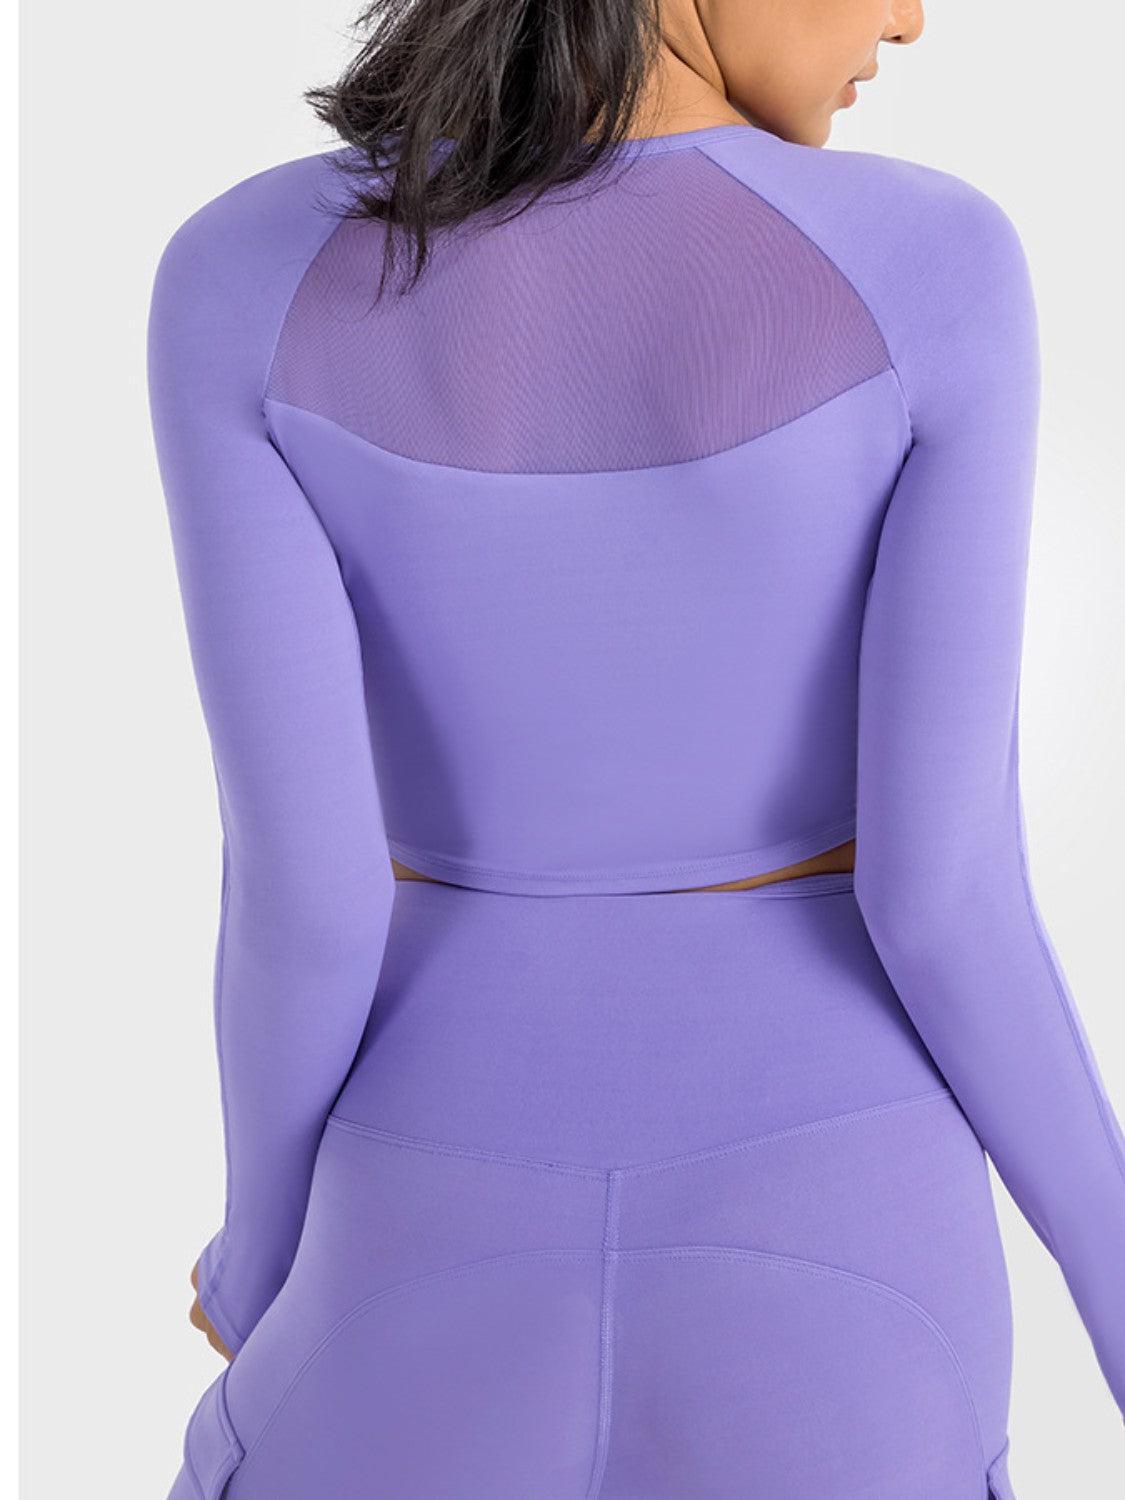 the back of a woman wearing a purple bodysuit